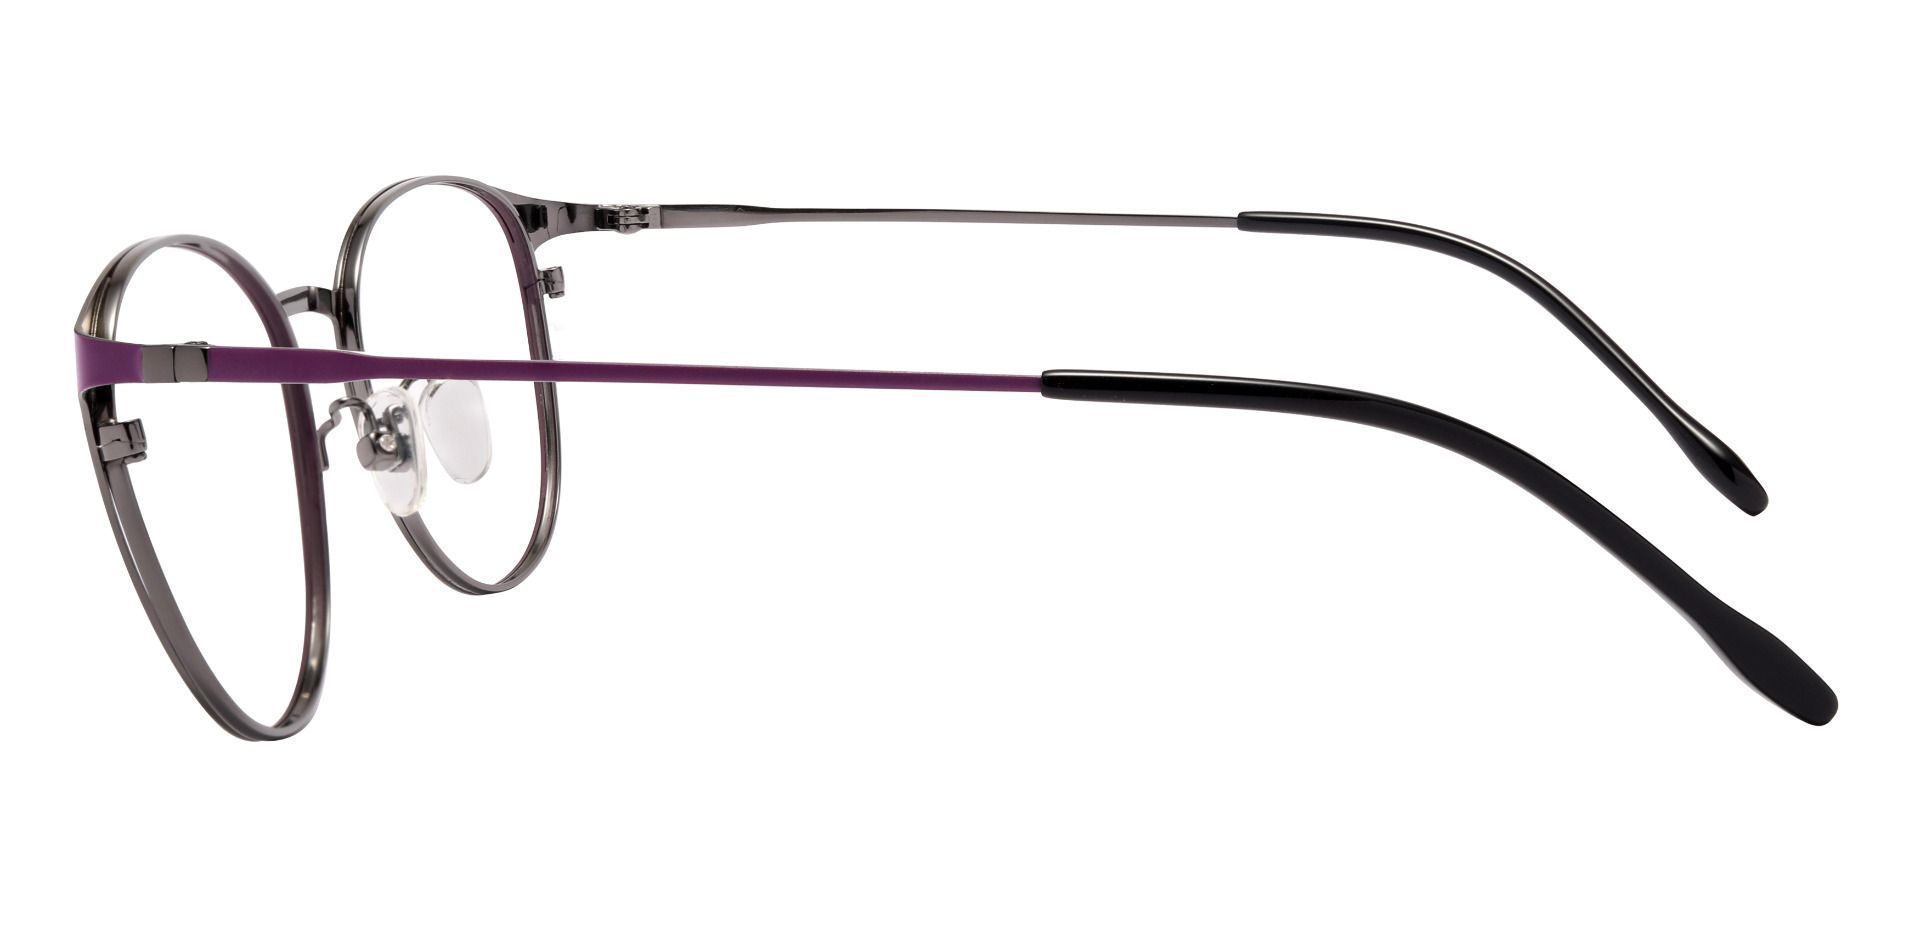 Bertie Oval Reading Glasses - Purple